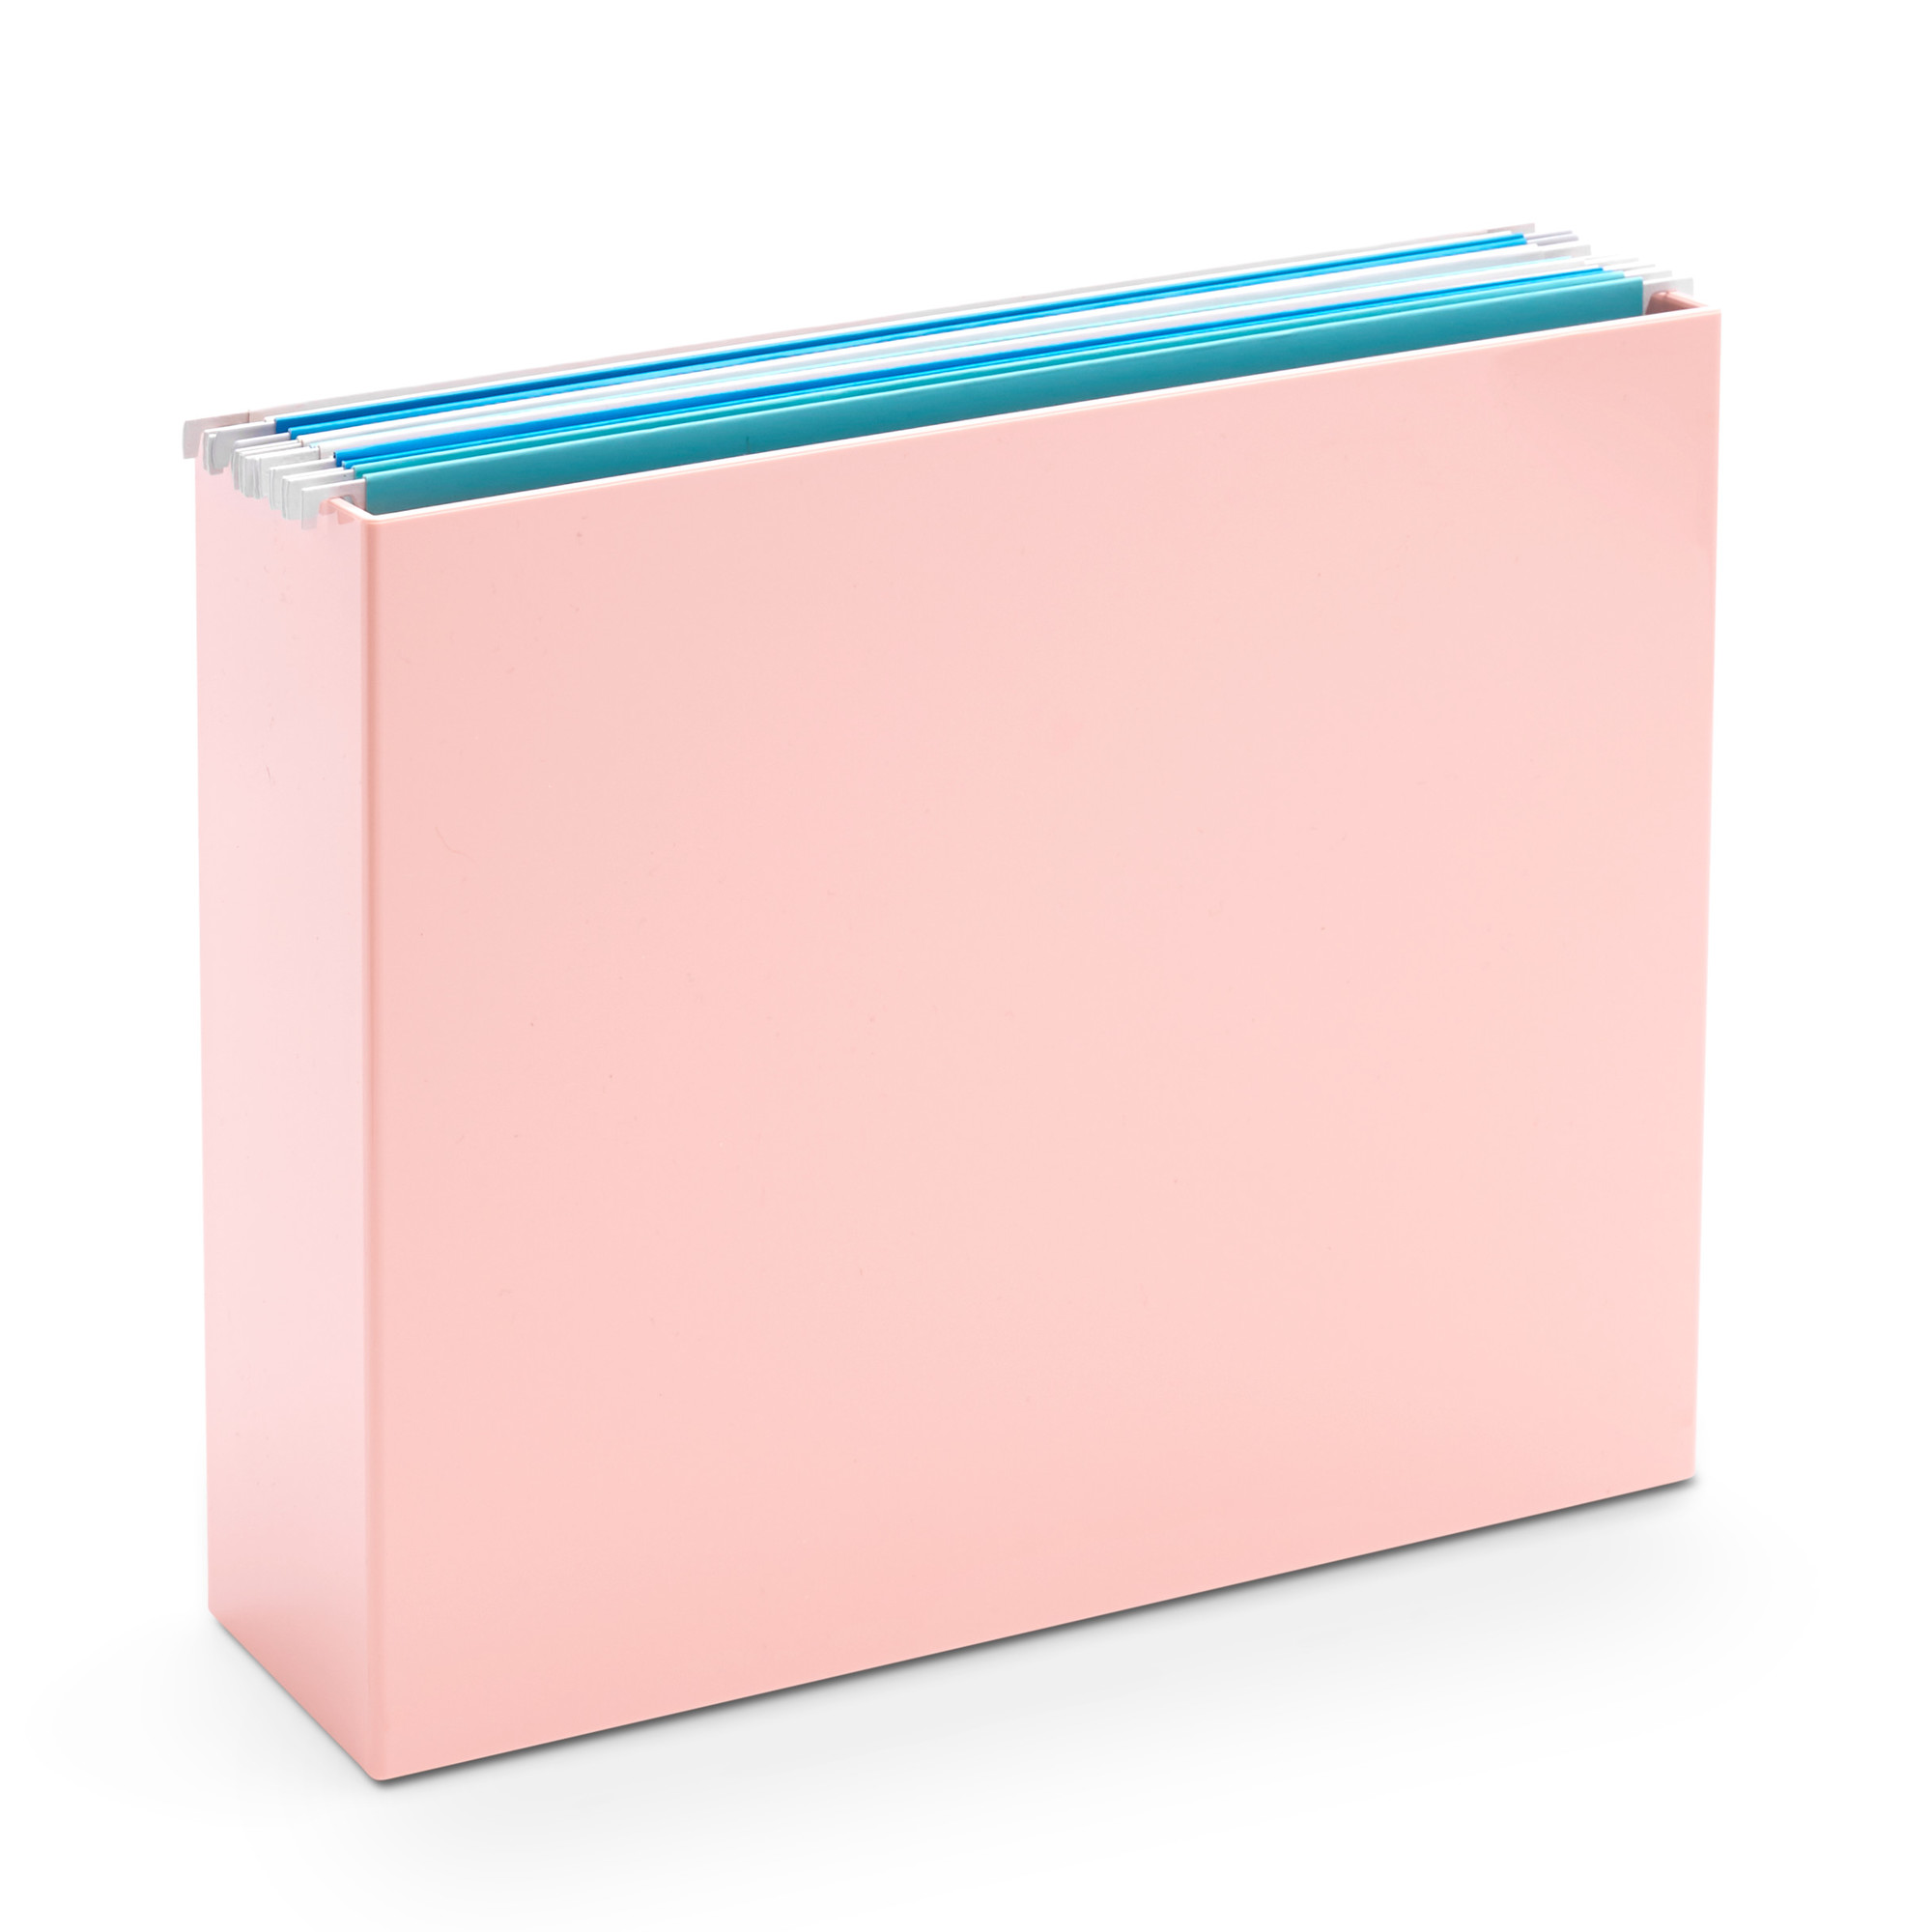 Blush File Box,Blush,hi-res